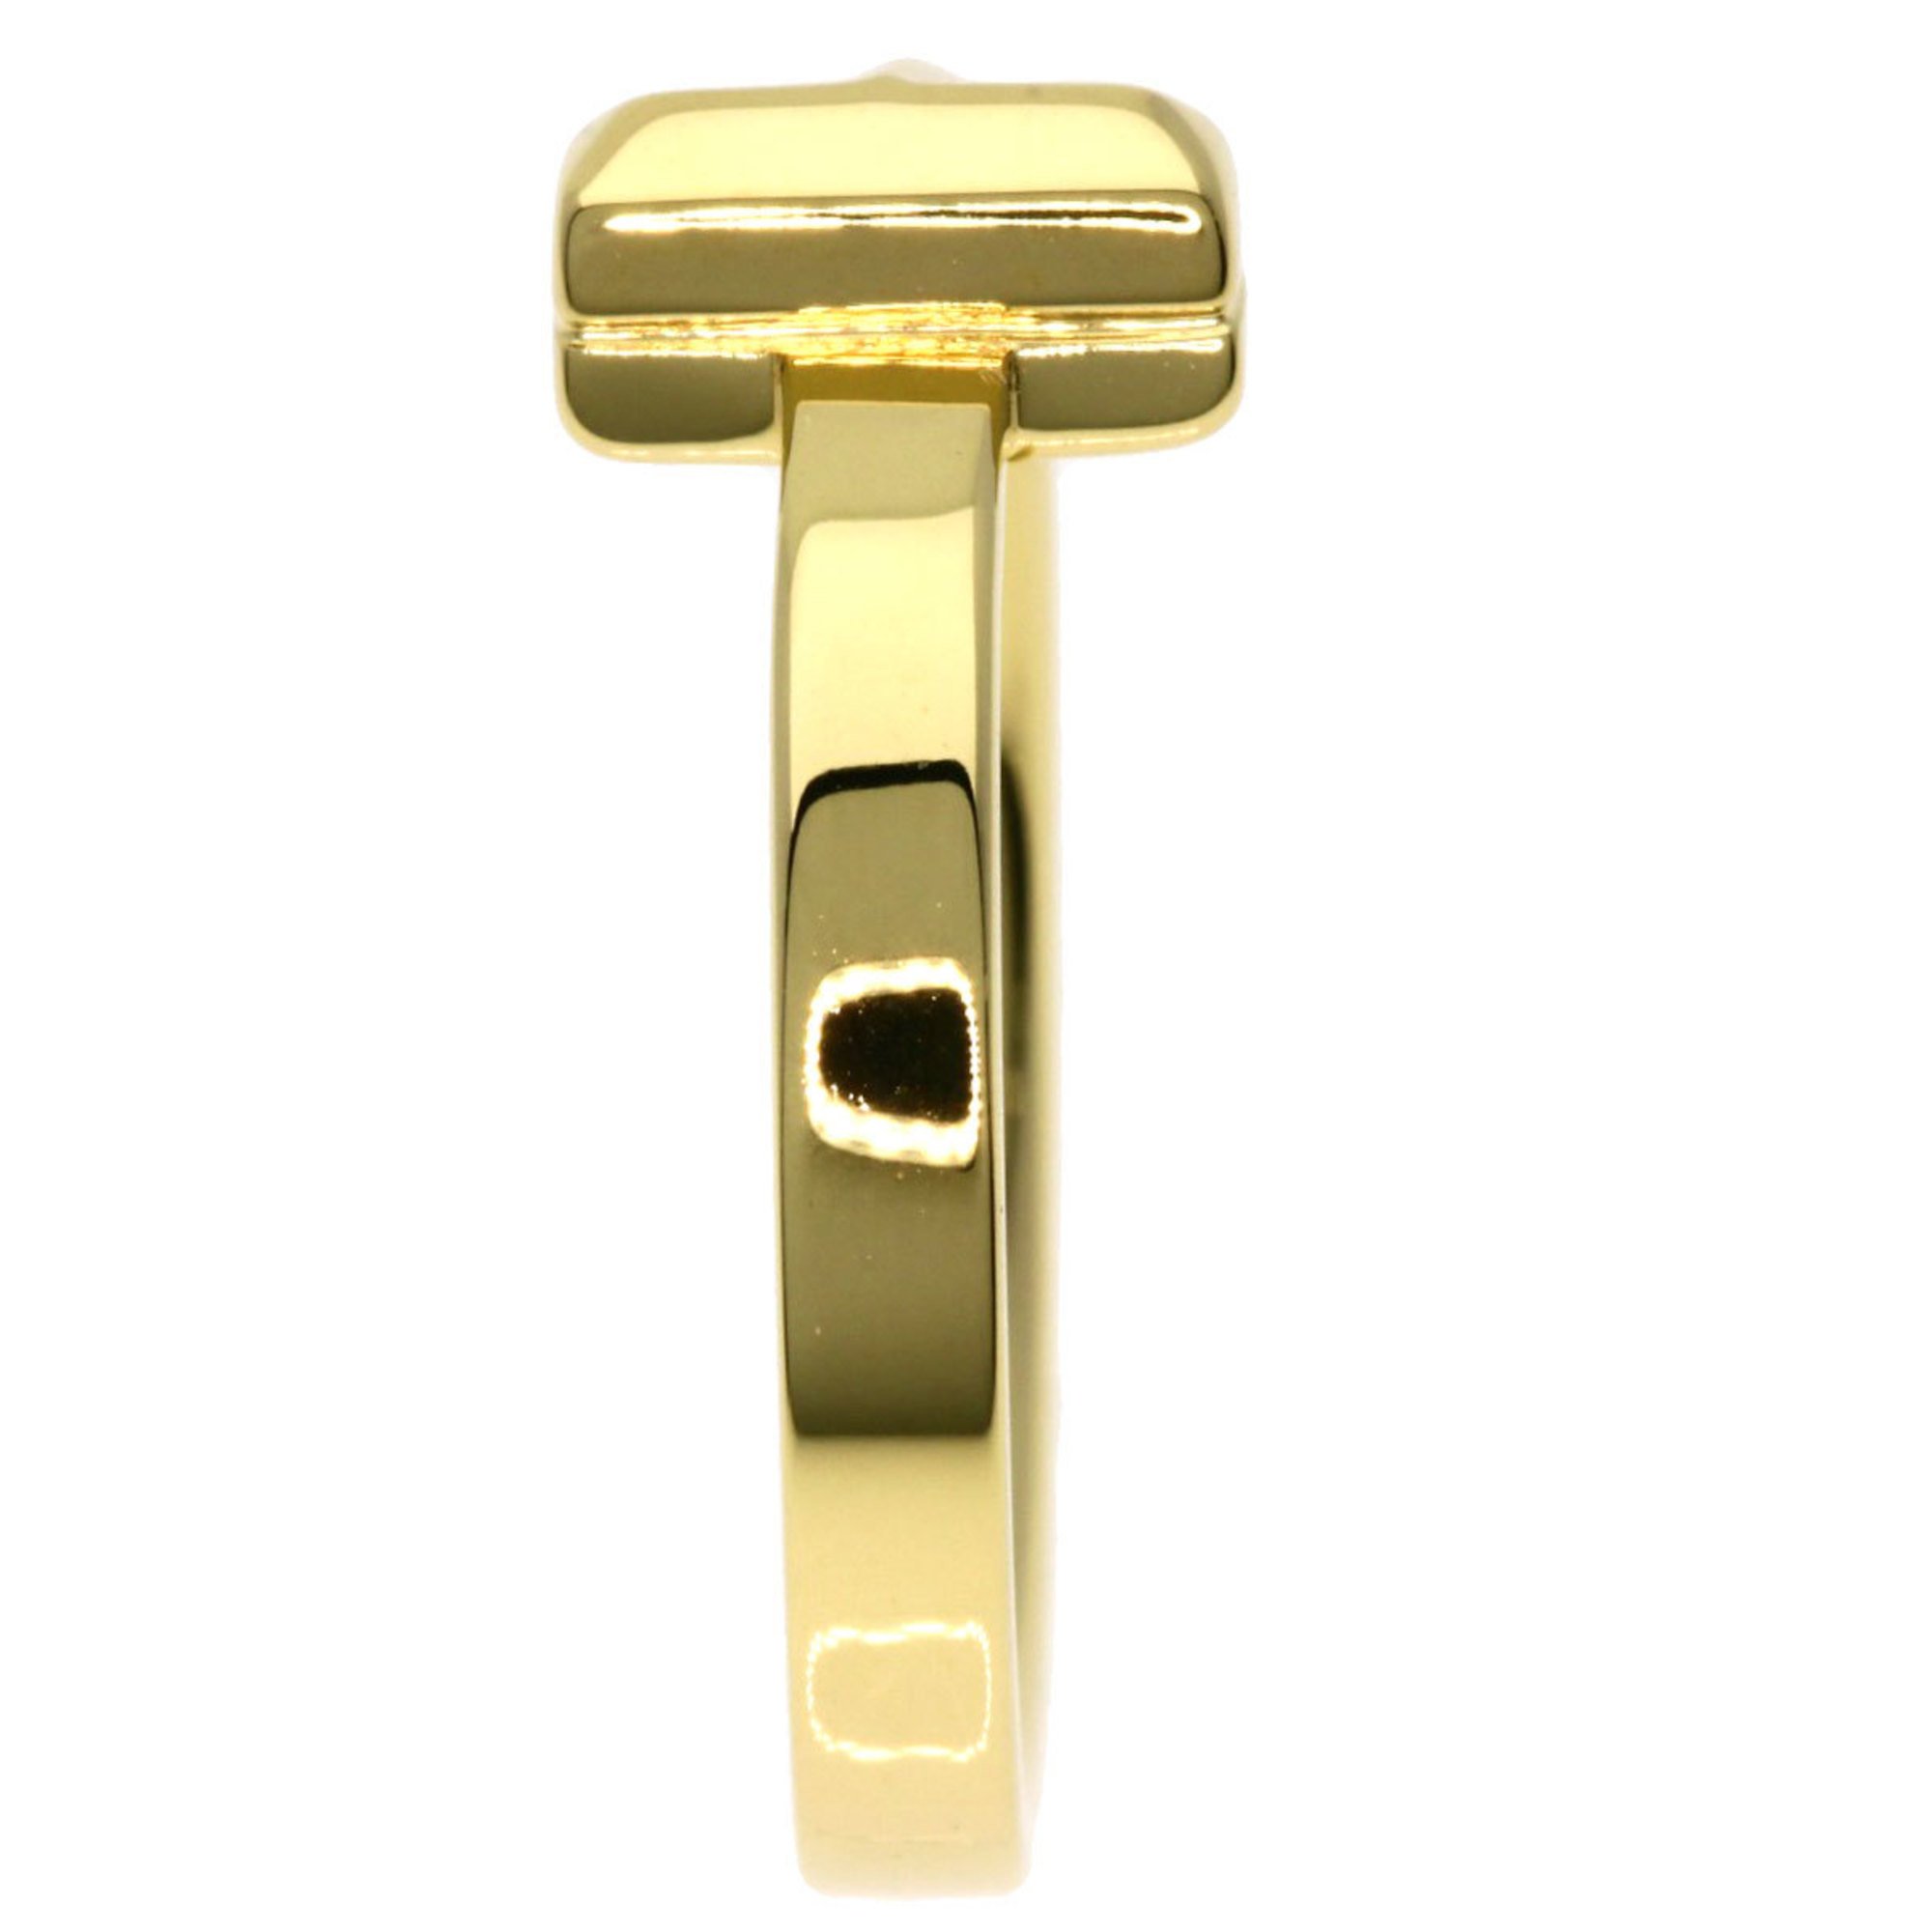 Tiffany T1 Ring, 18K Yellow Gold, Women's